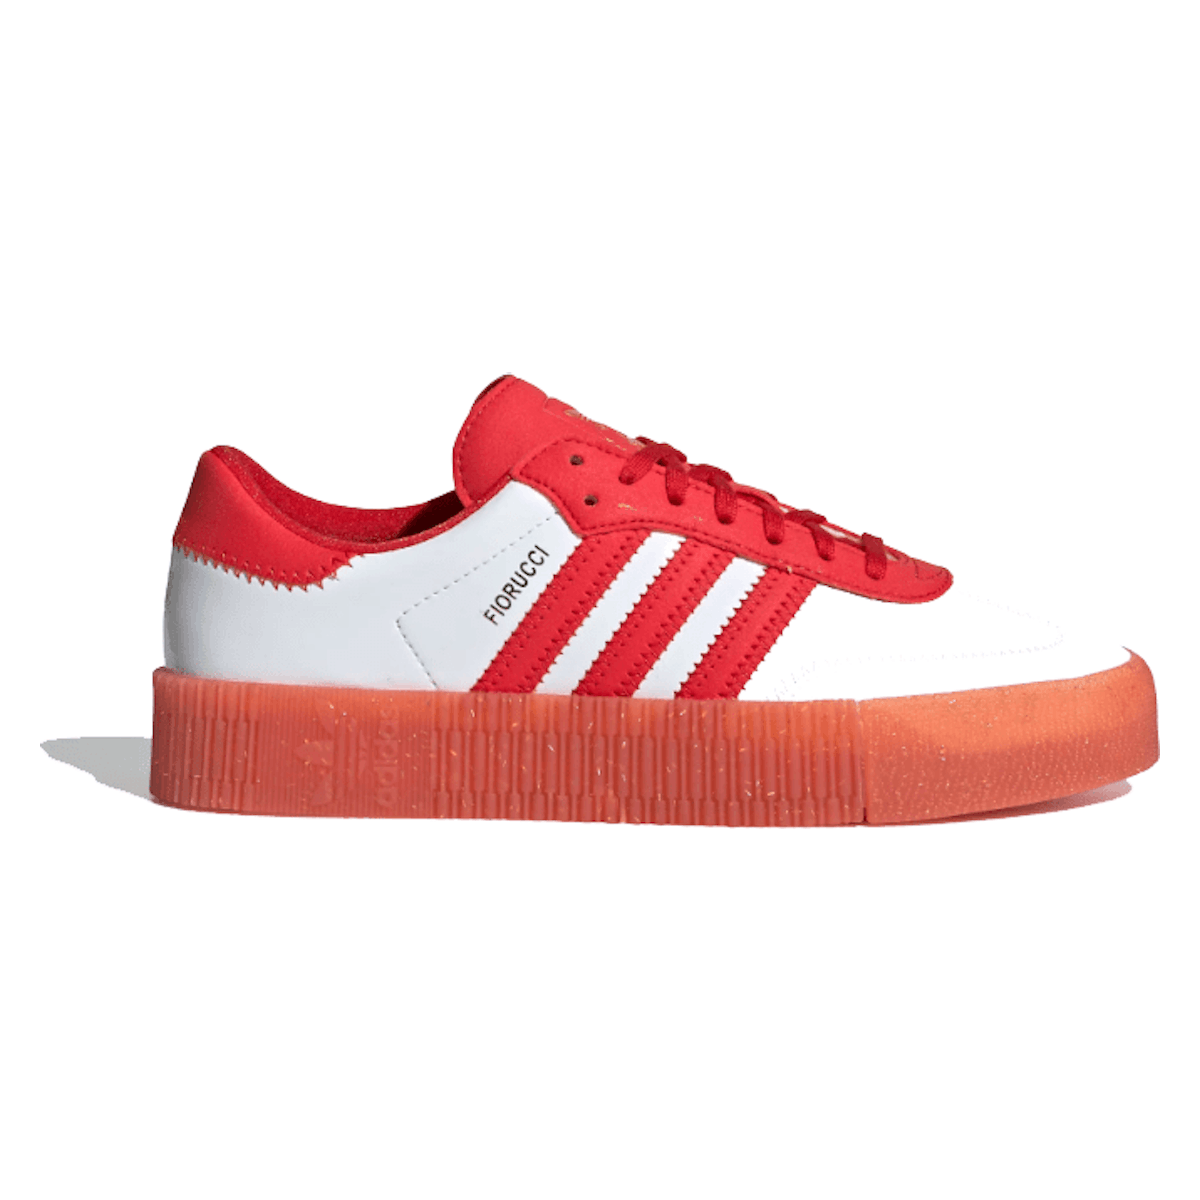 Adidas x Fiorucci Sambarose "Red"